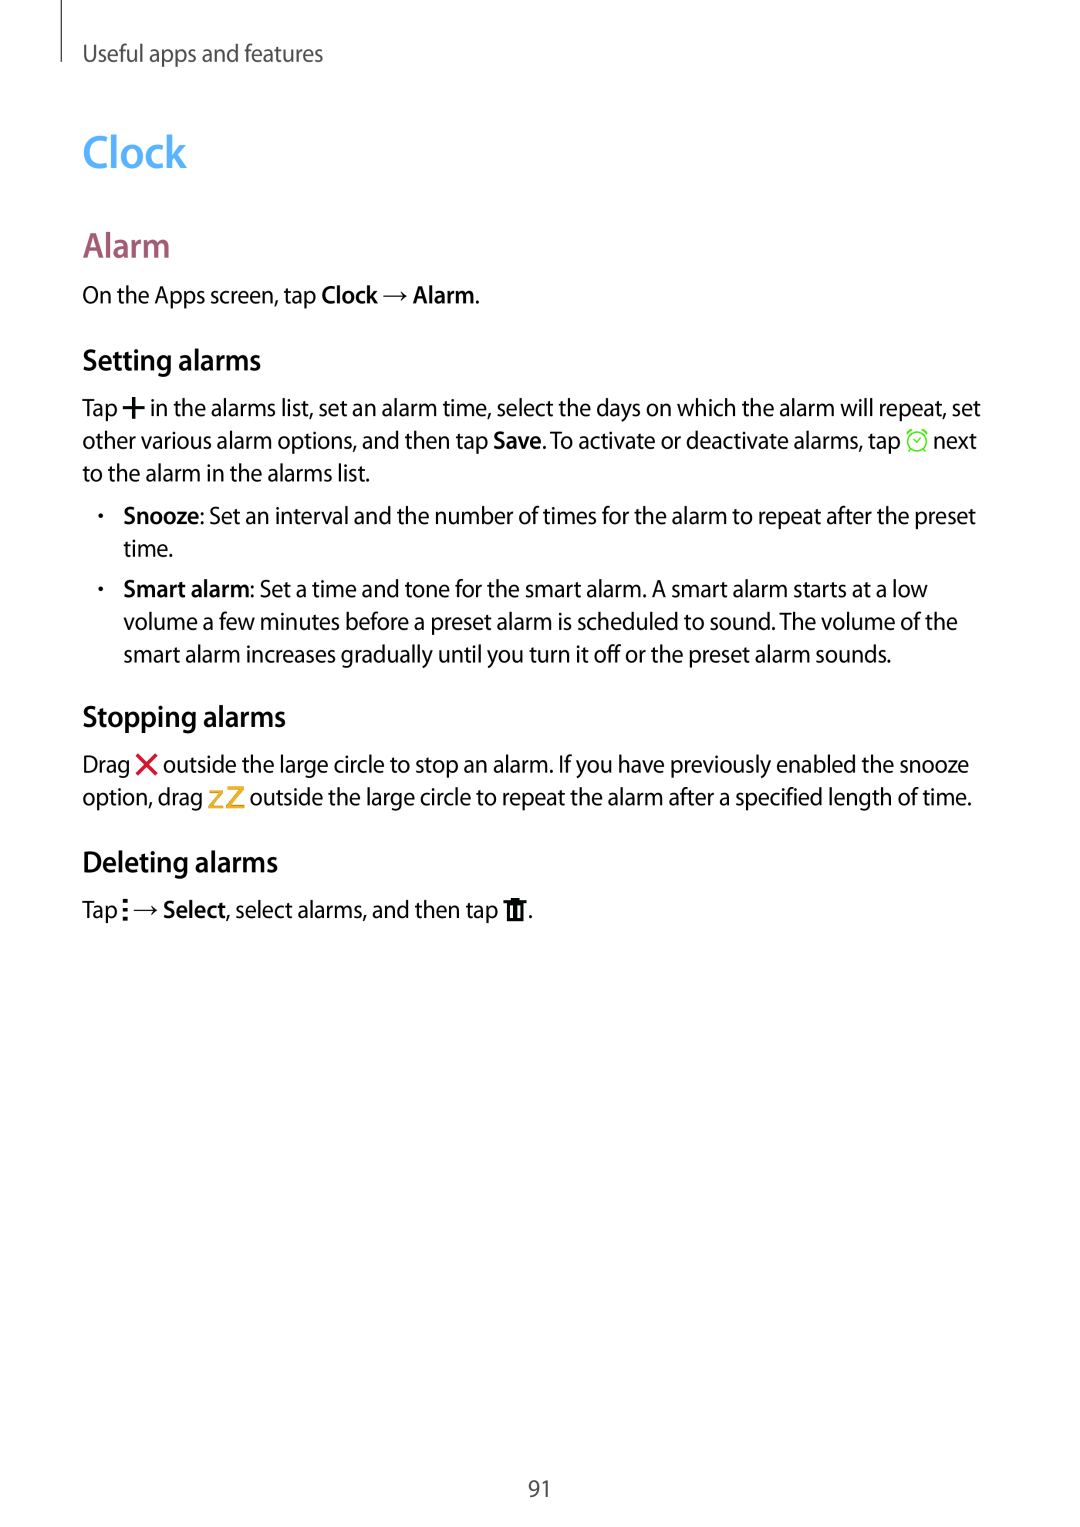 Samsung SM-A700FZWASEB manual Clock, Alarm, Setting alarms, Stopping alarms, Deleting alarms, Useful apps and features 